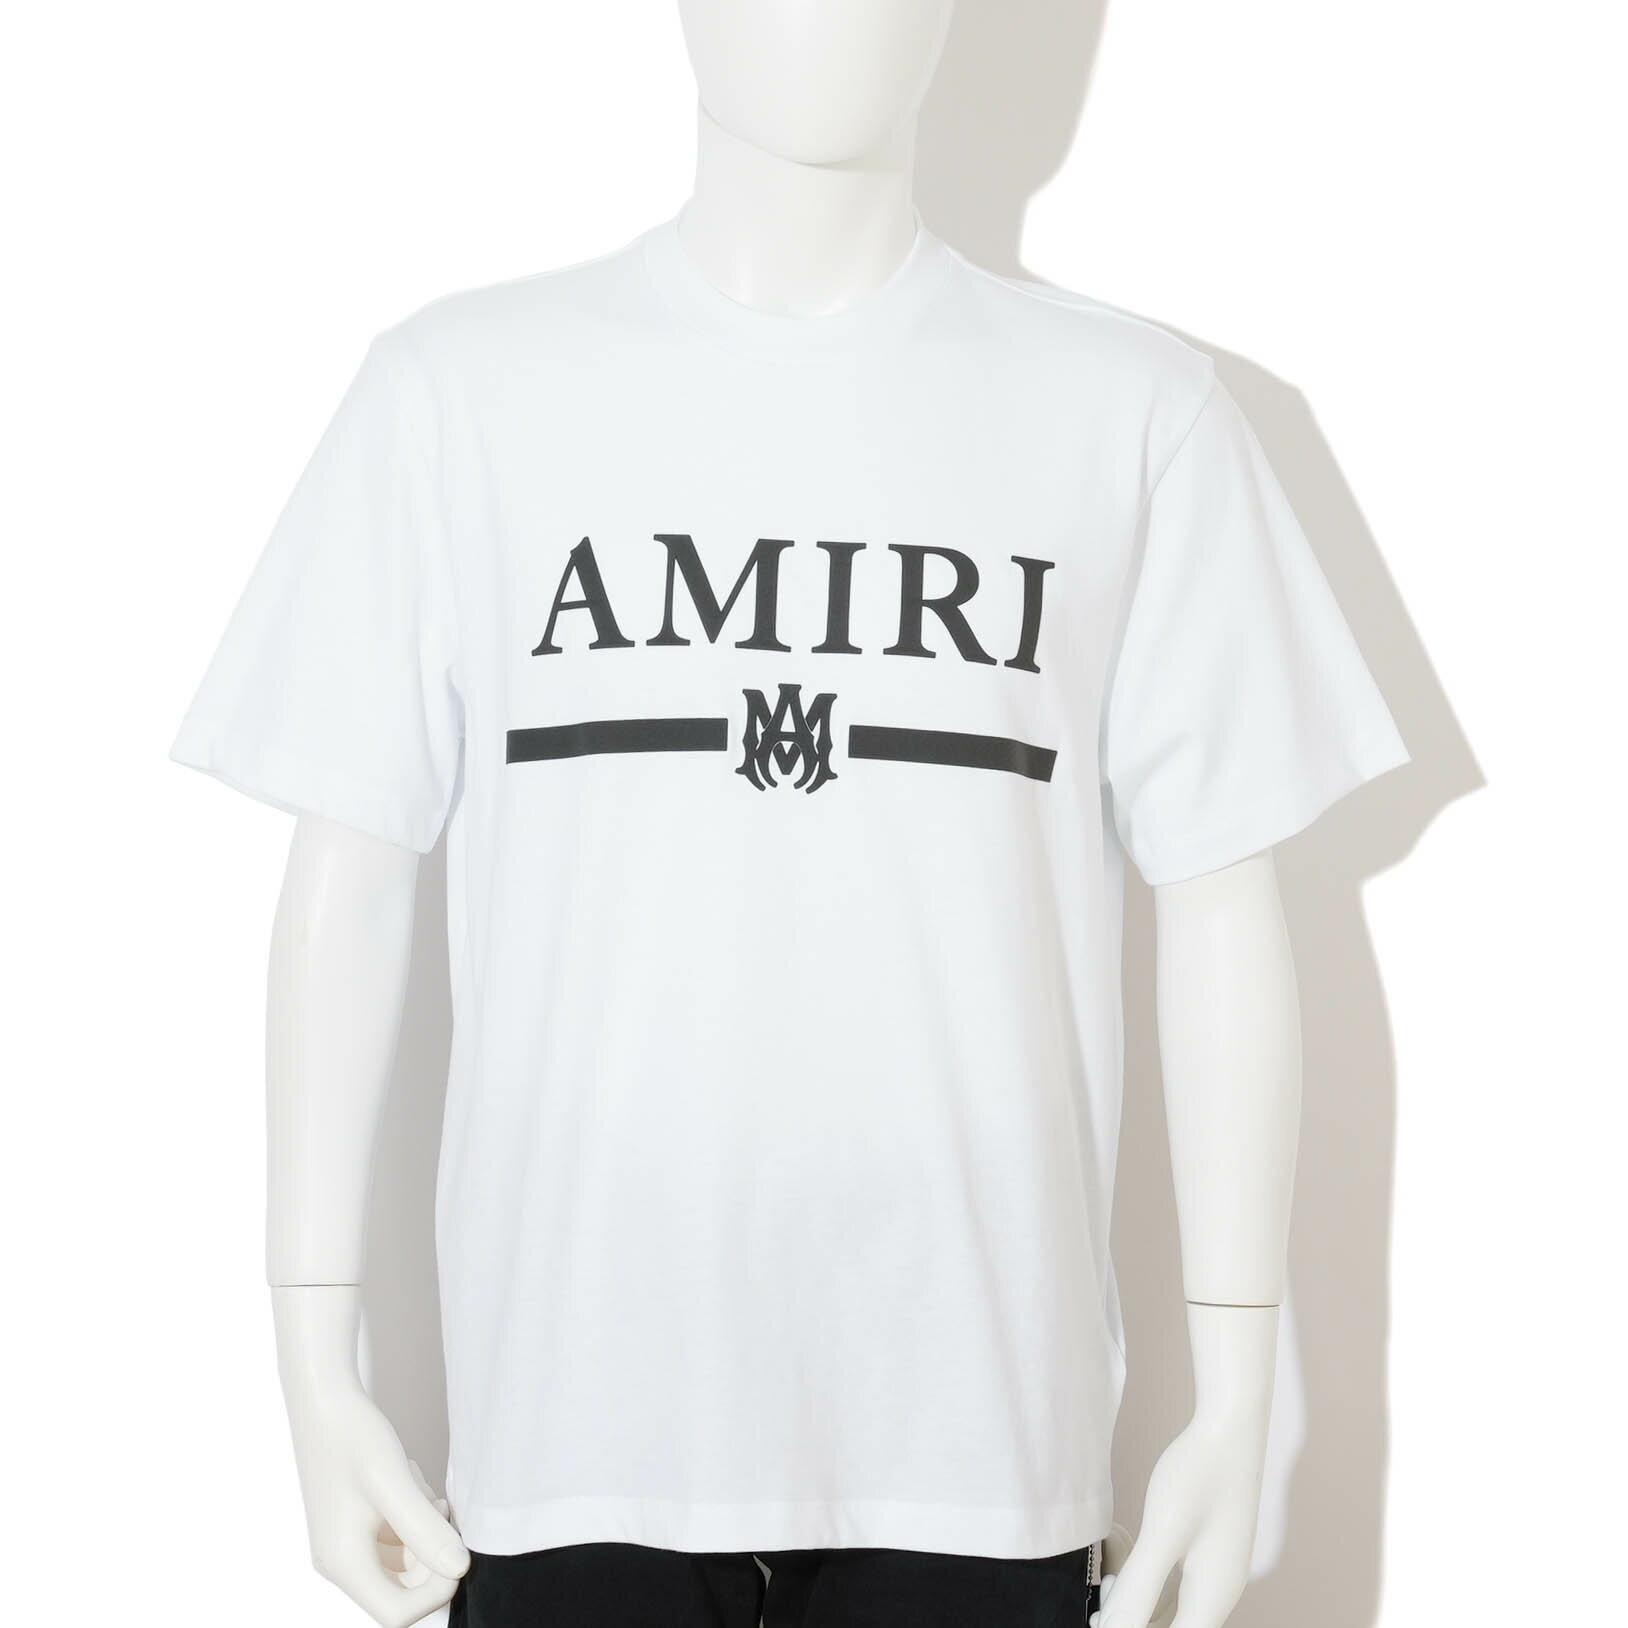 AMIRI MA BAR LOGO TEE Tシャツ アミリ 半袖 メンズ 男性 バー ロゴ ホワイト 白 人気モデル